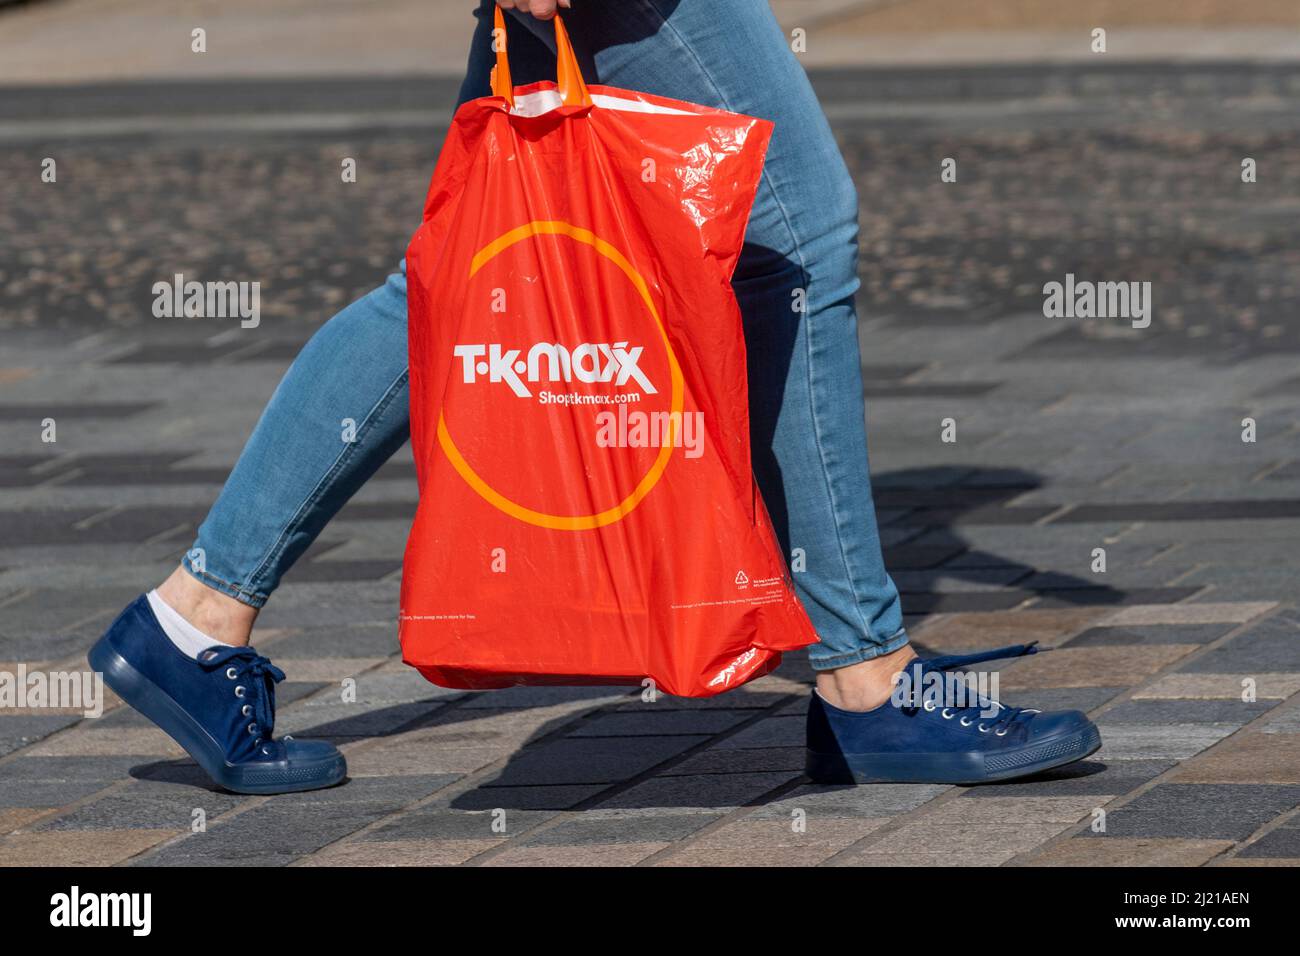 Tk-maxx retail and home store plastic bags in Preston, Uk Stock Photo -  Alamy